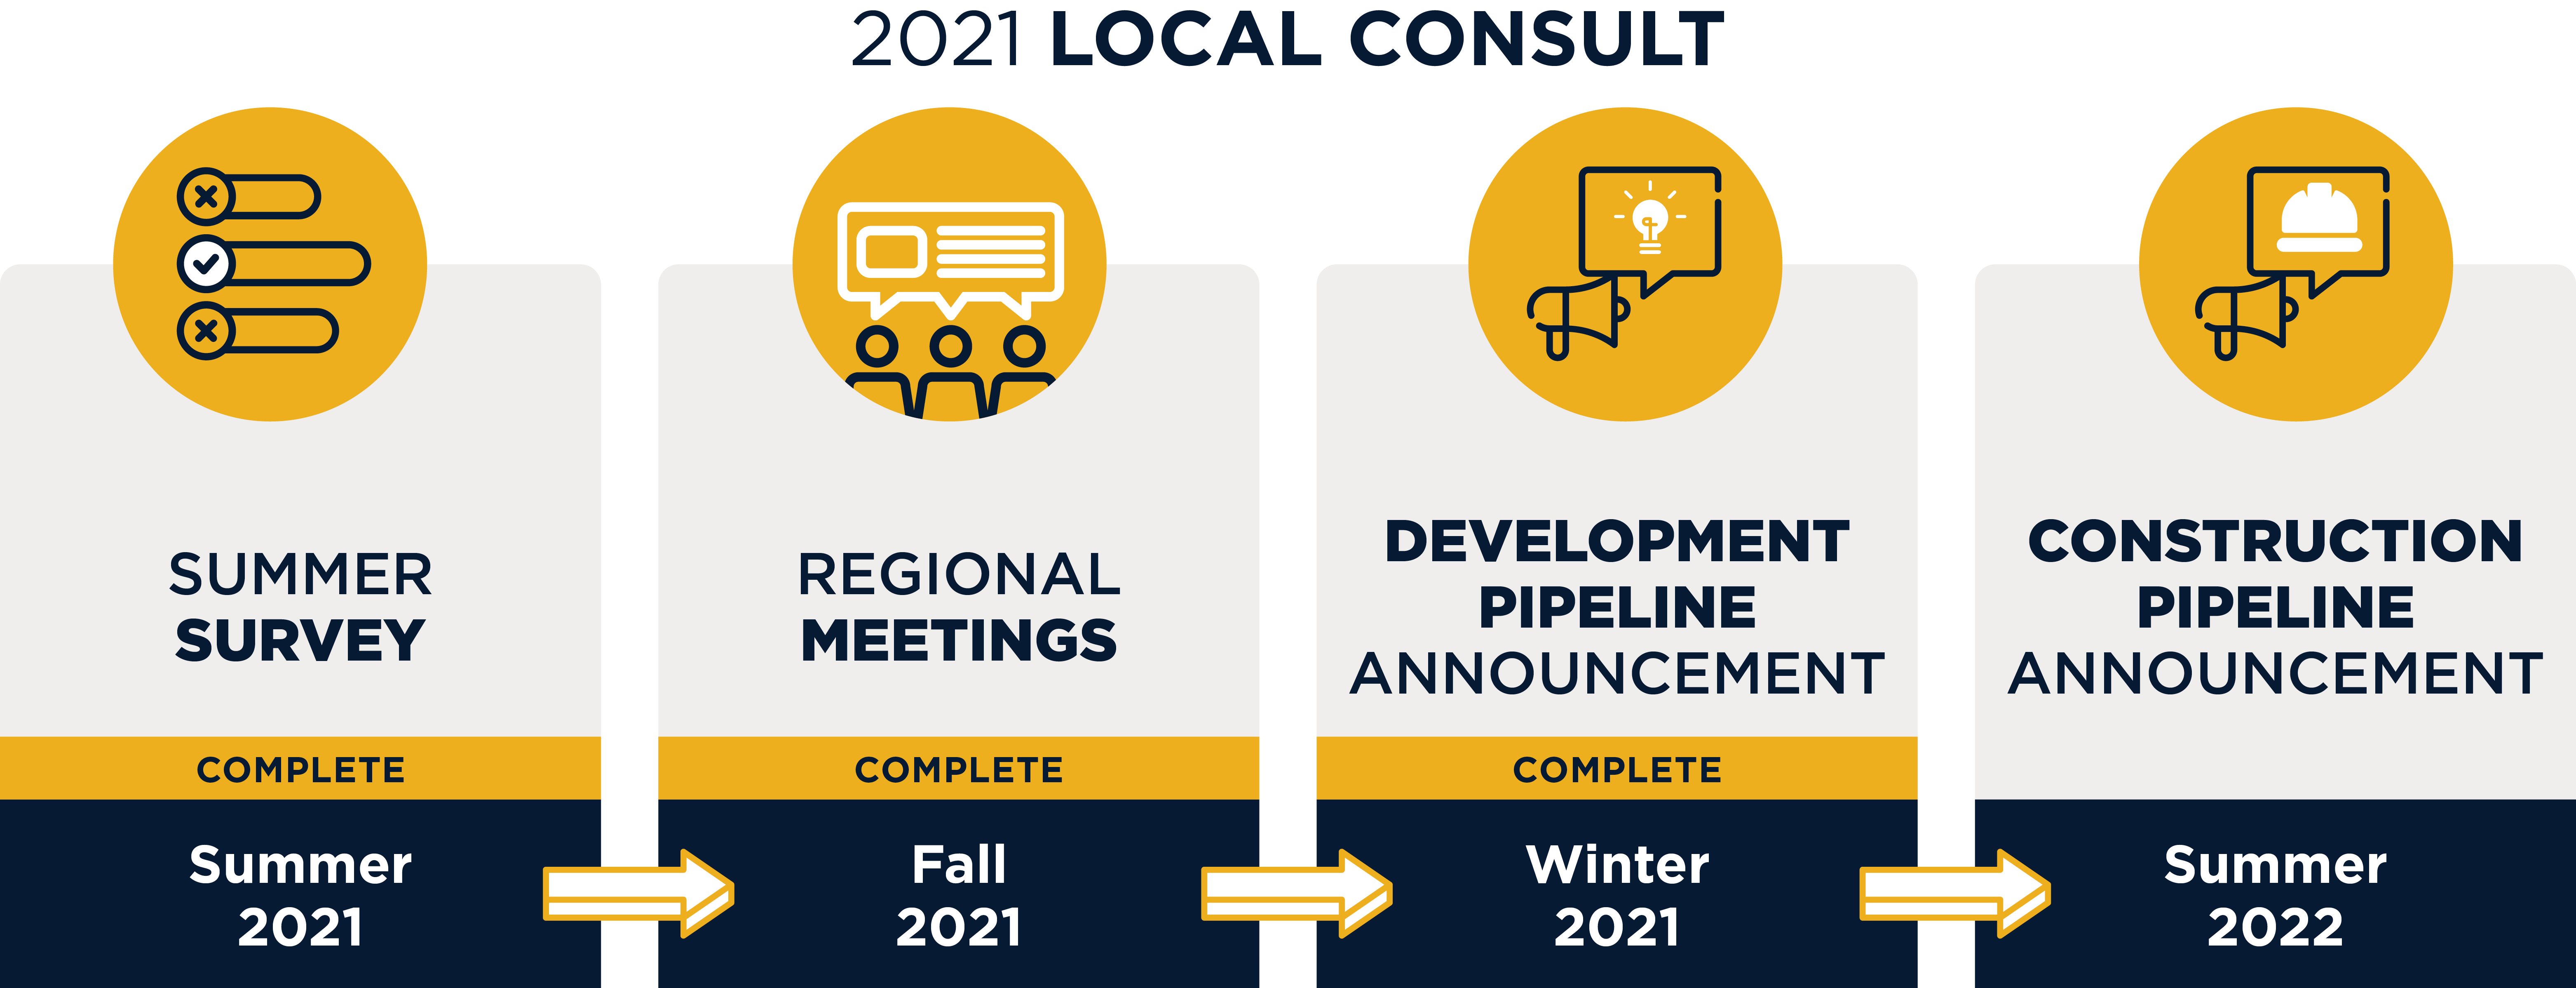 2021 Local Consult Process